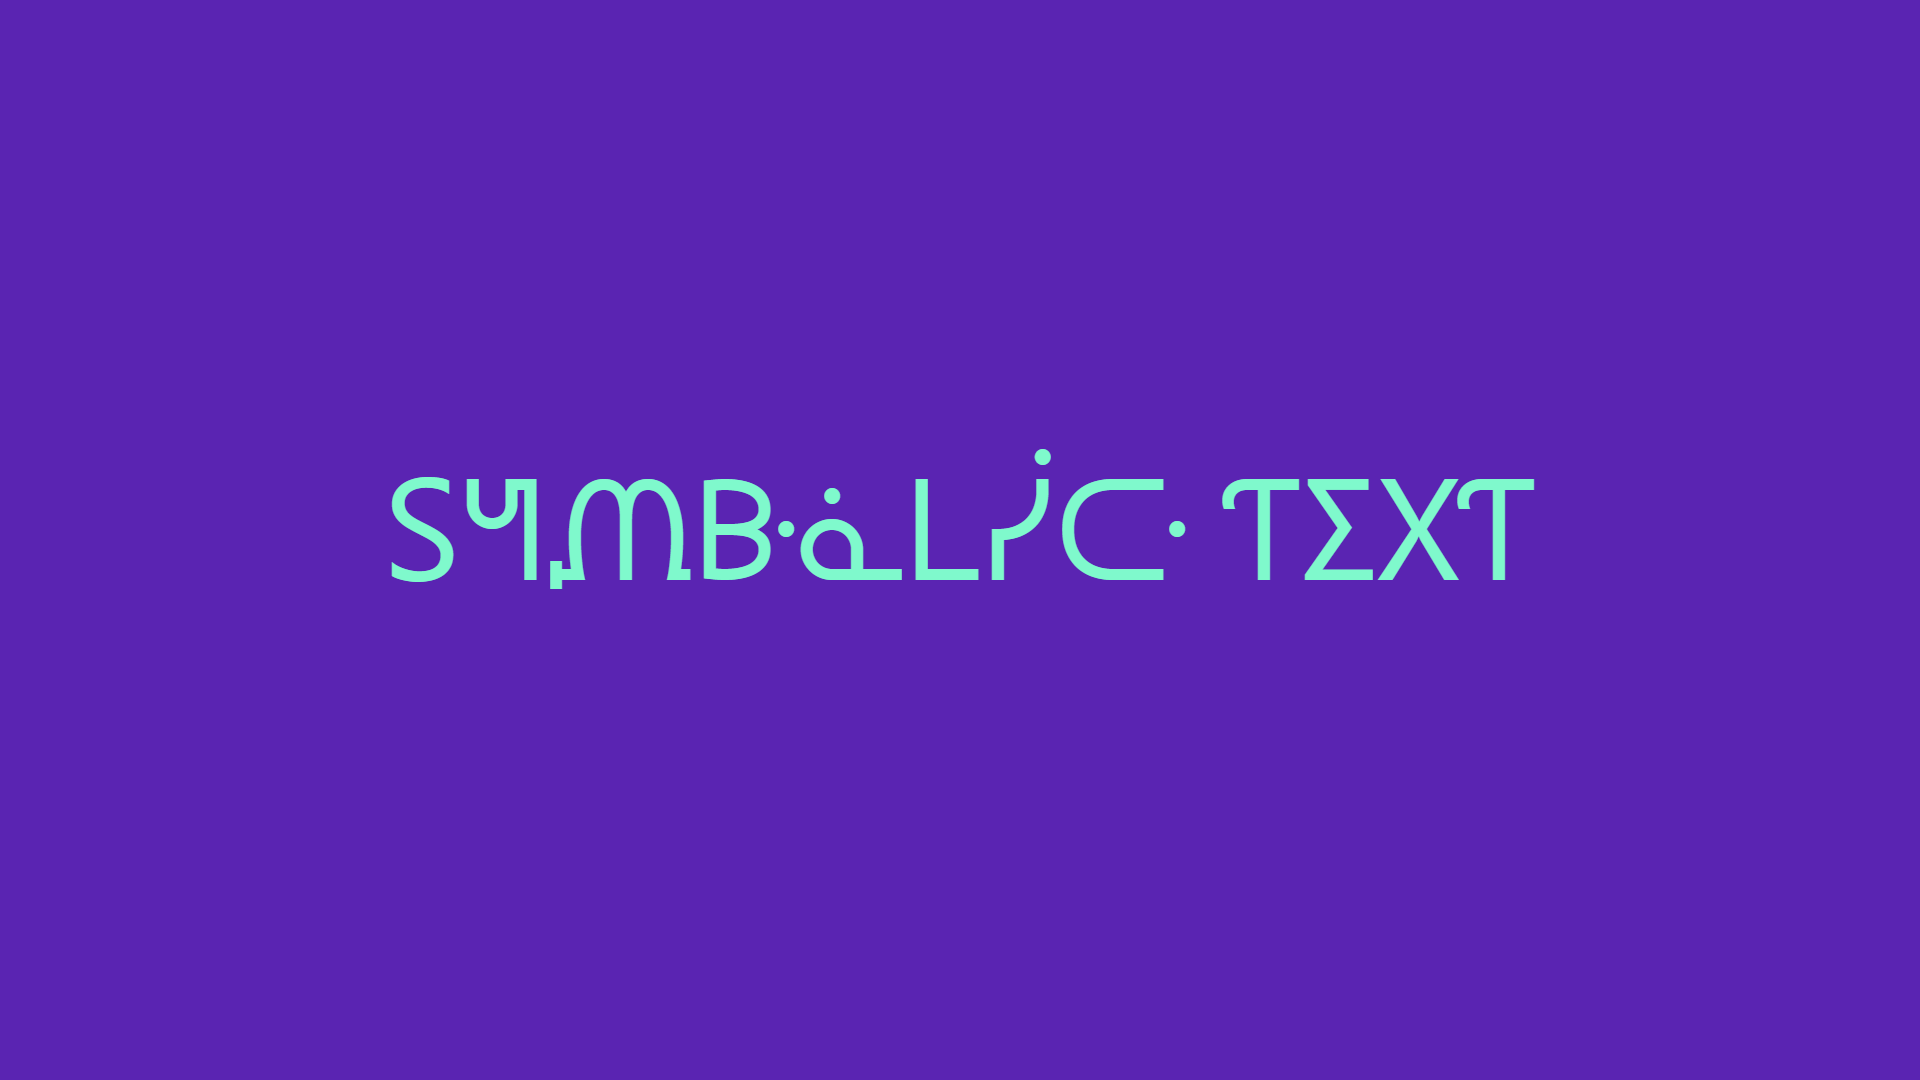 Symbolic Text Generator